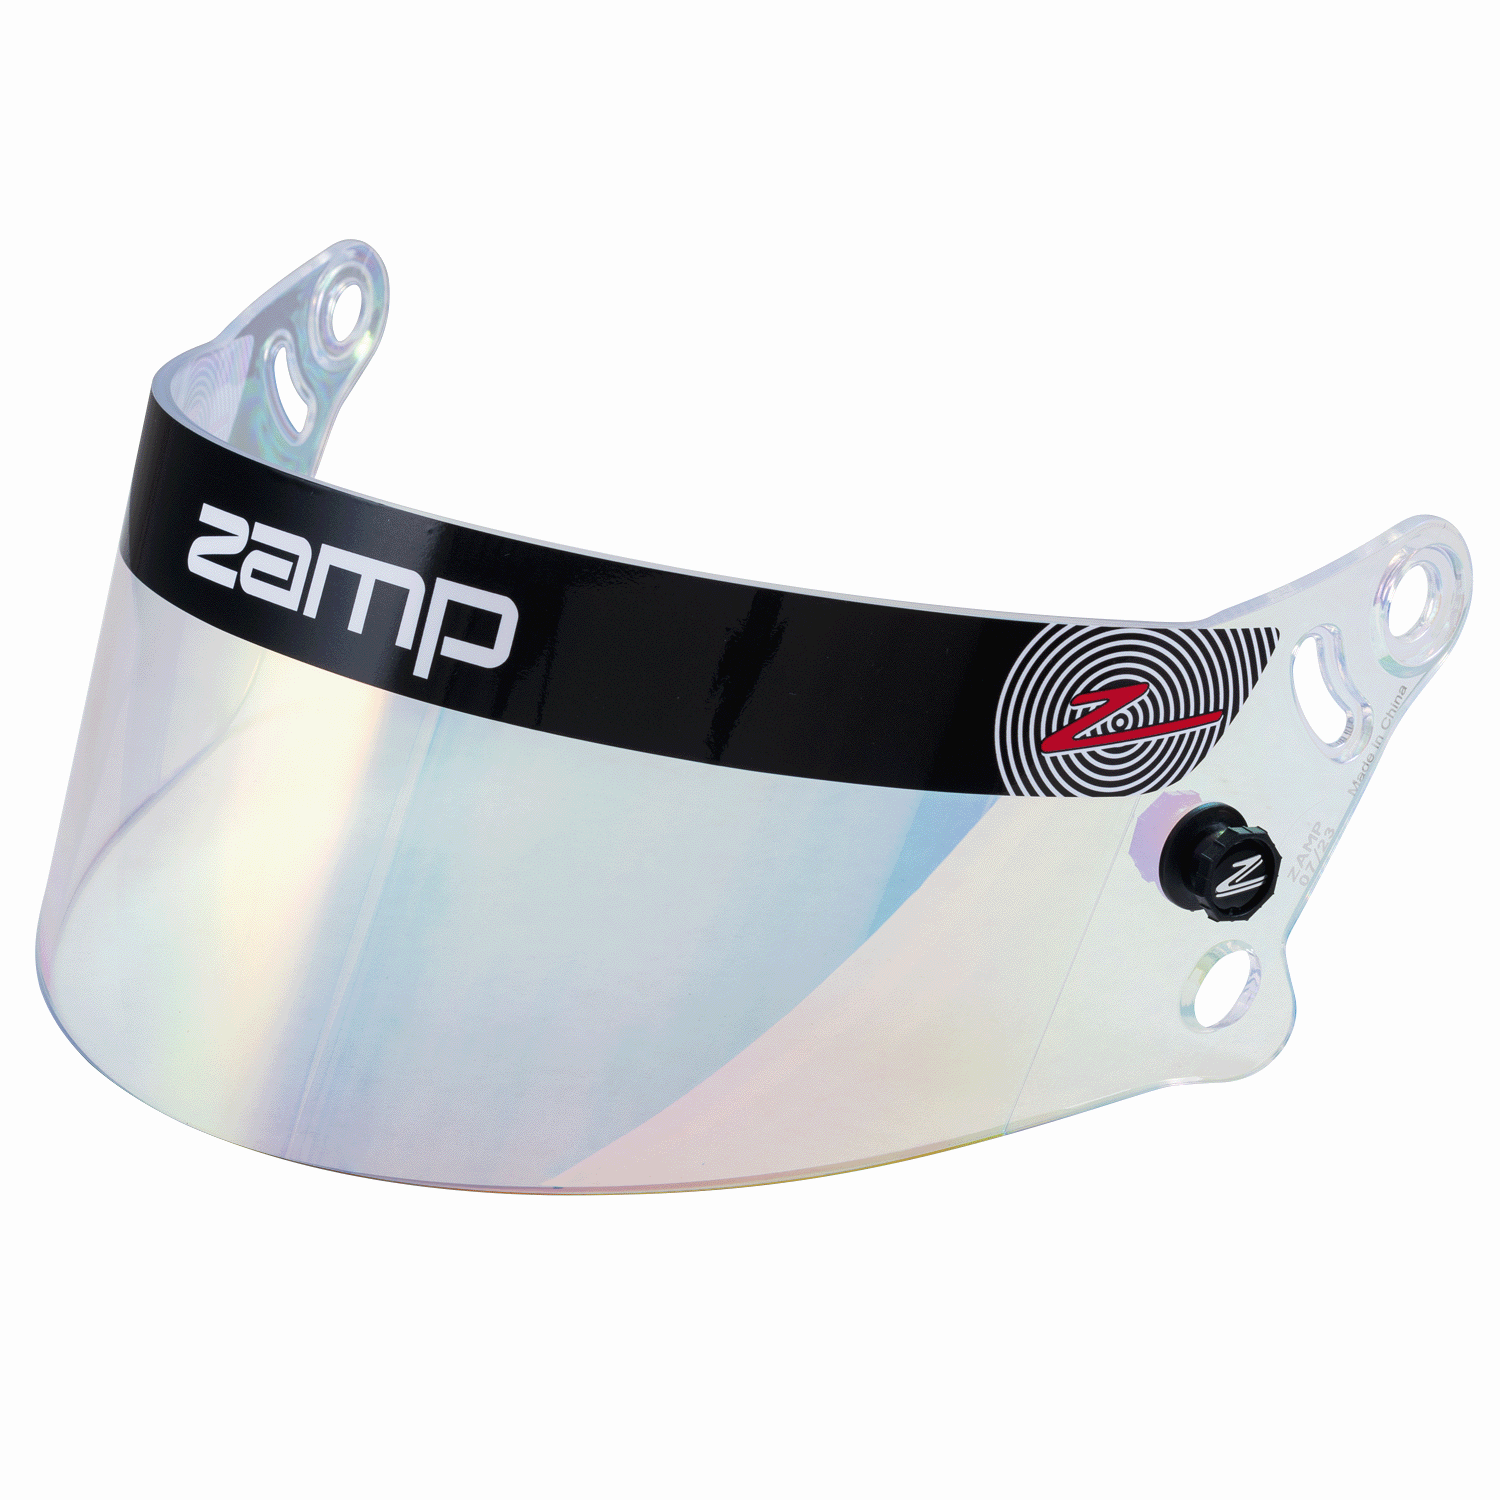 Zamp Z-20 Photochromatic Prism Shield, 3 options